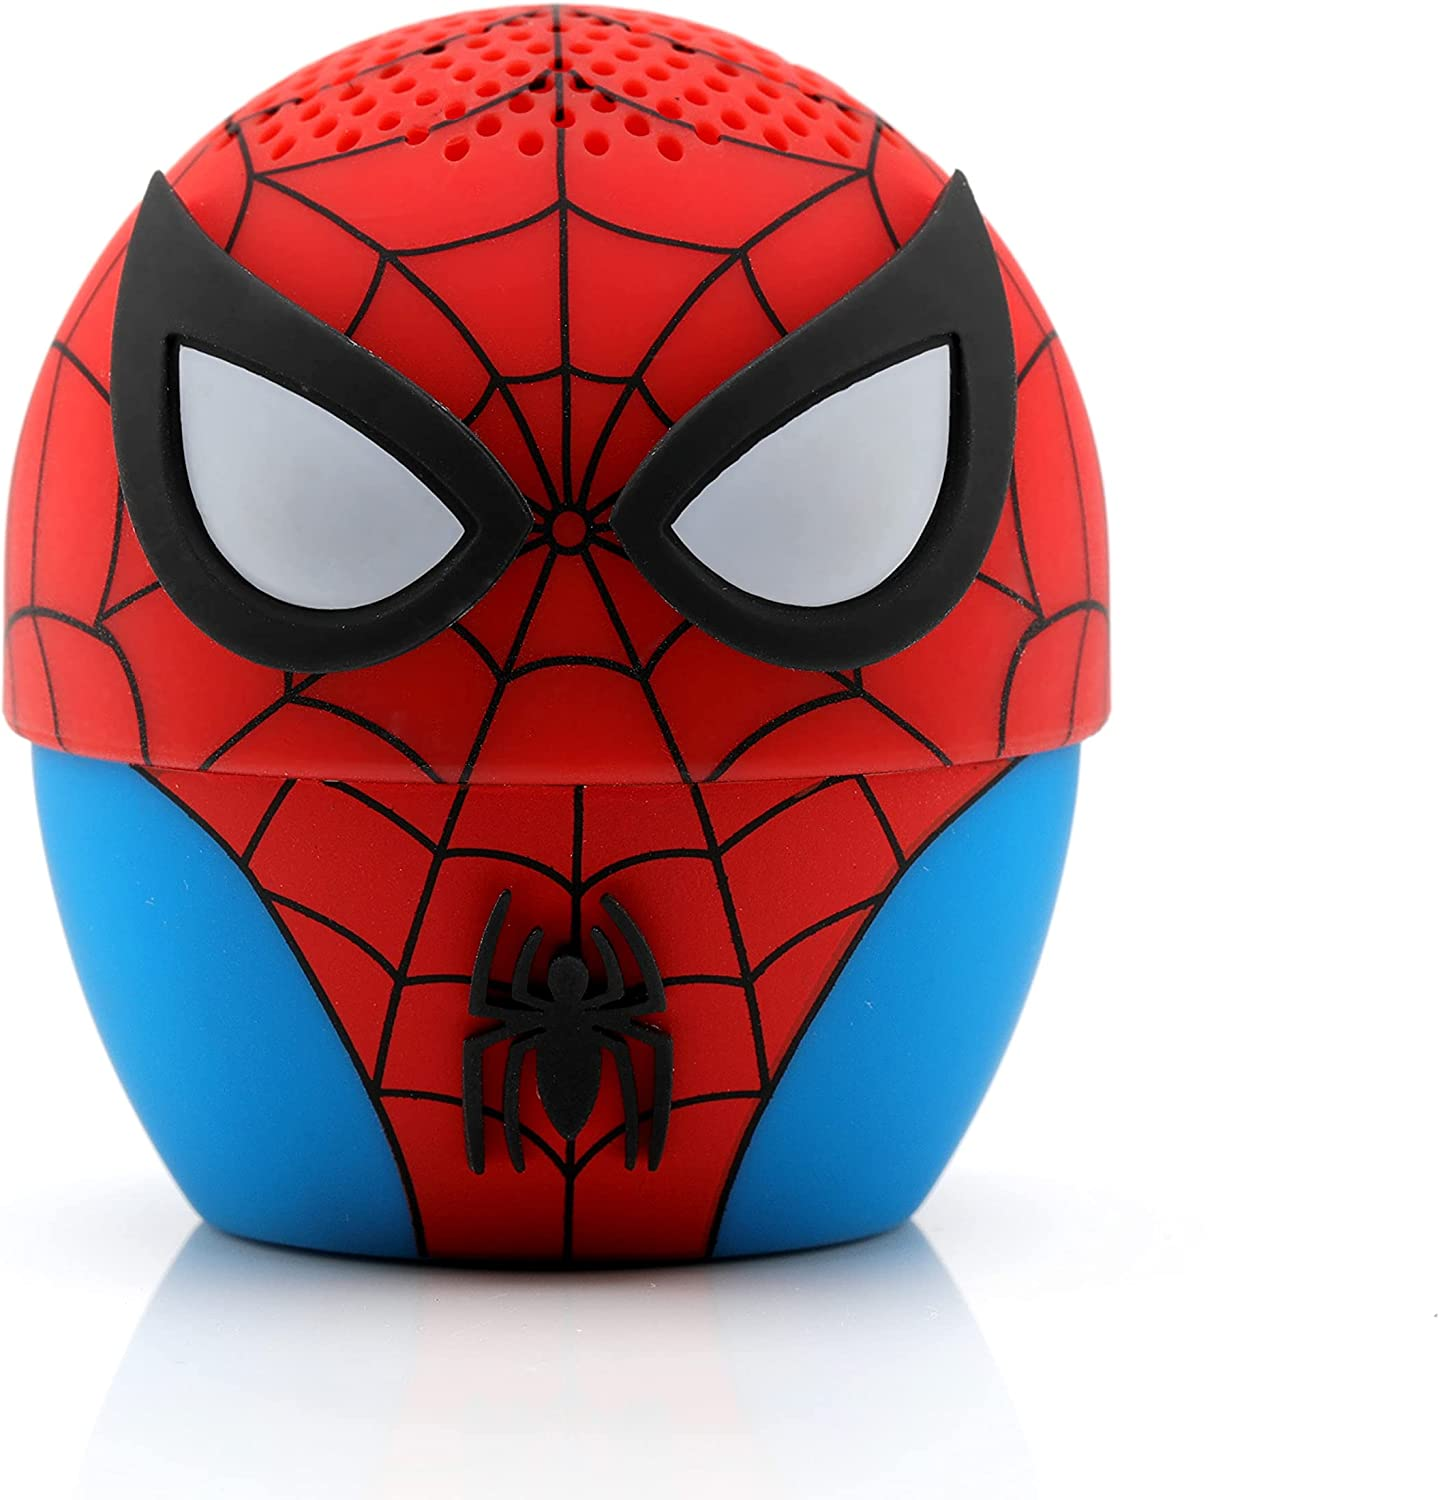 Bitty Boomers Marvel Spider-Man - Mini Bluetooth Speaker $7.96